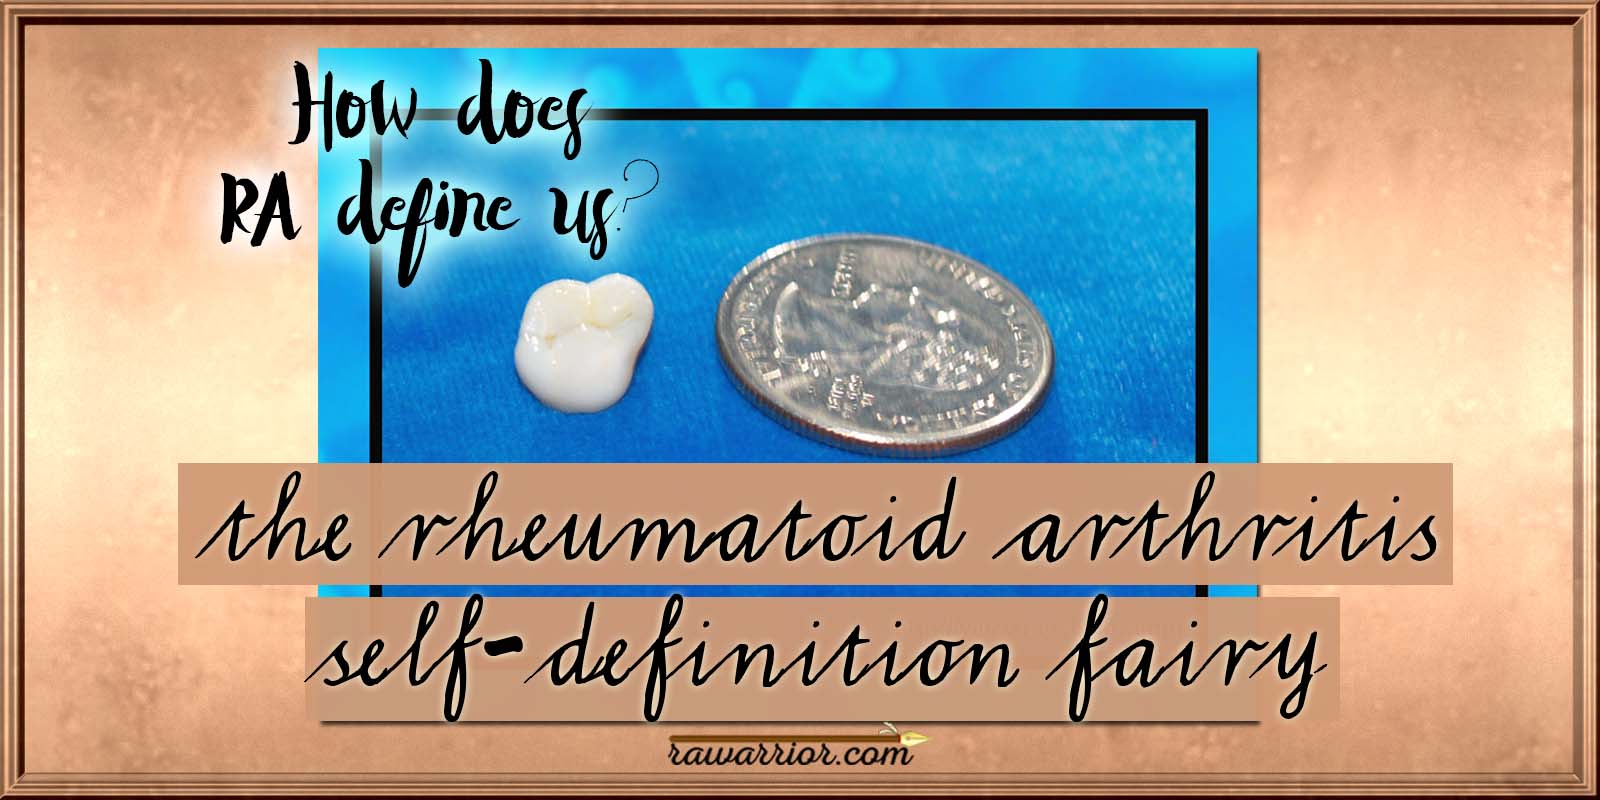 Self-definition rheumatoid arthritis